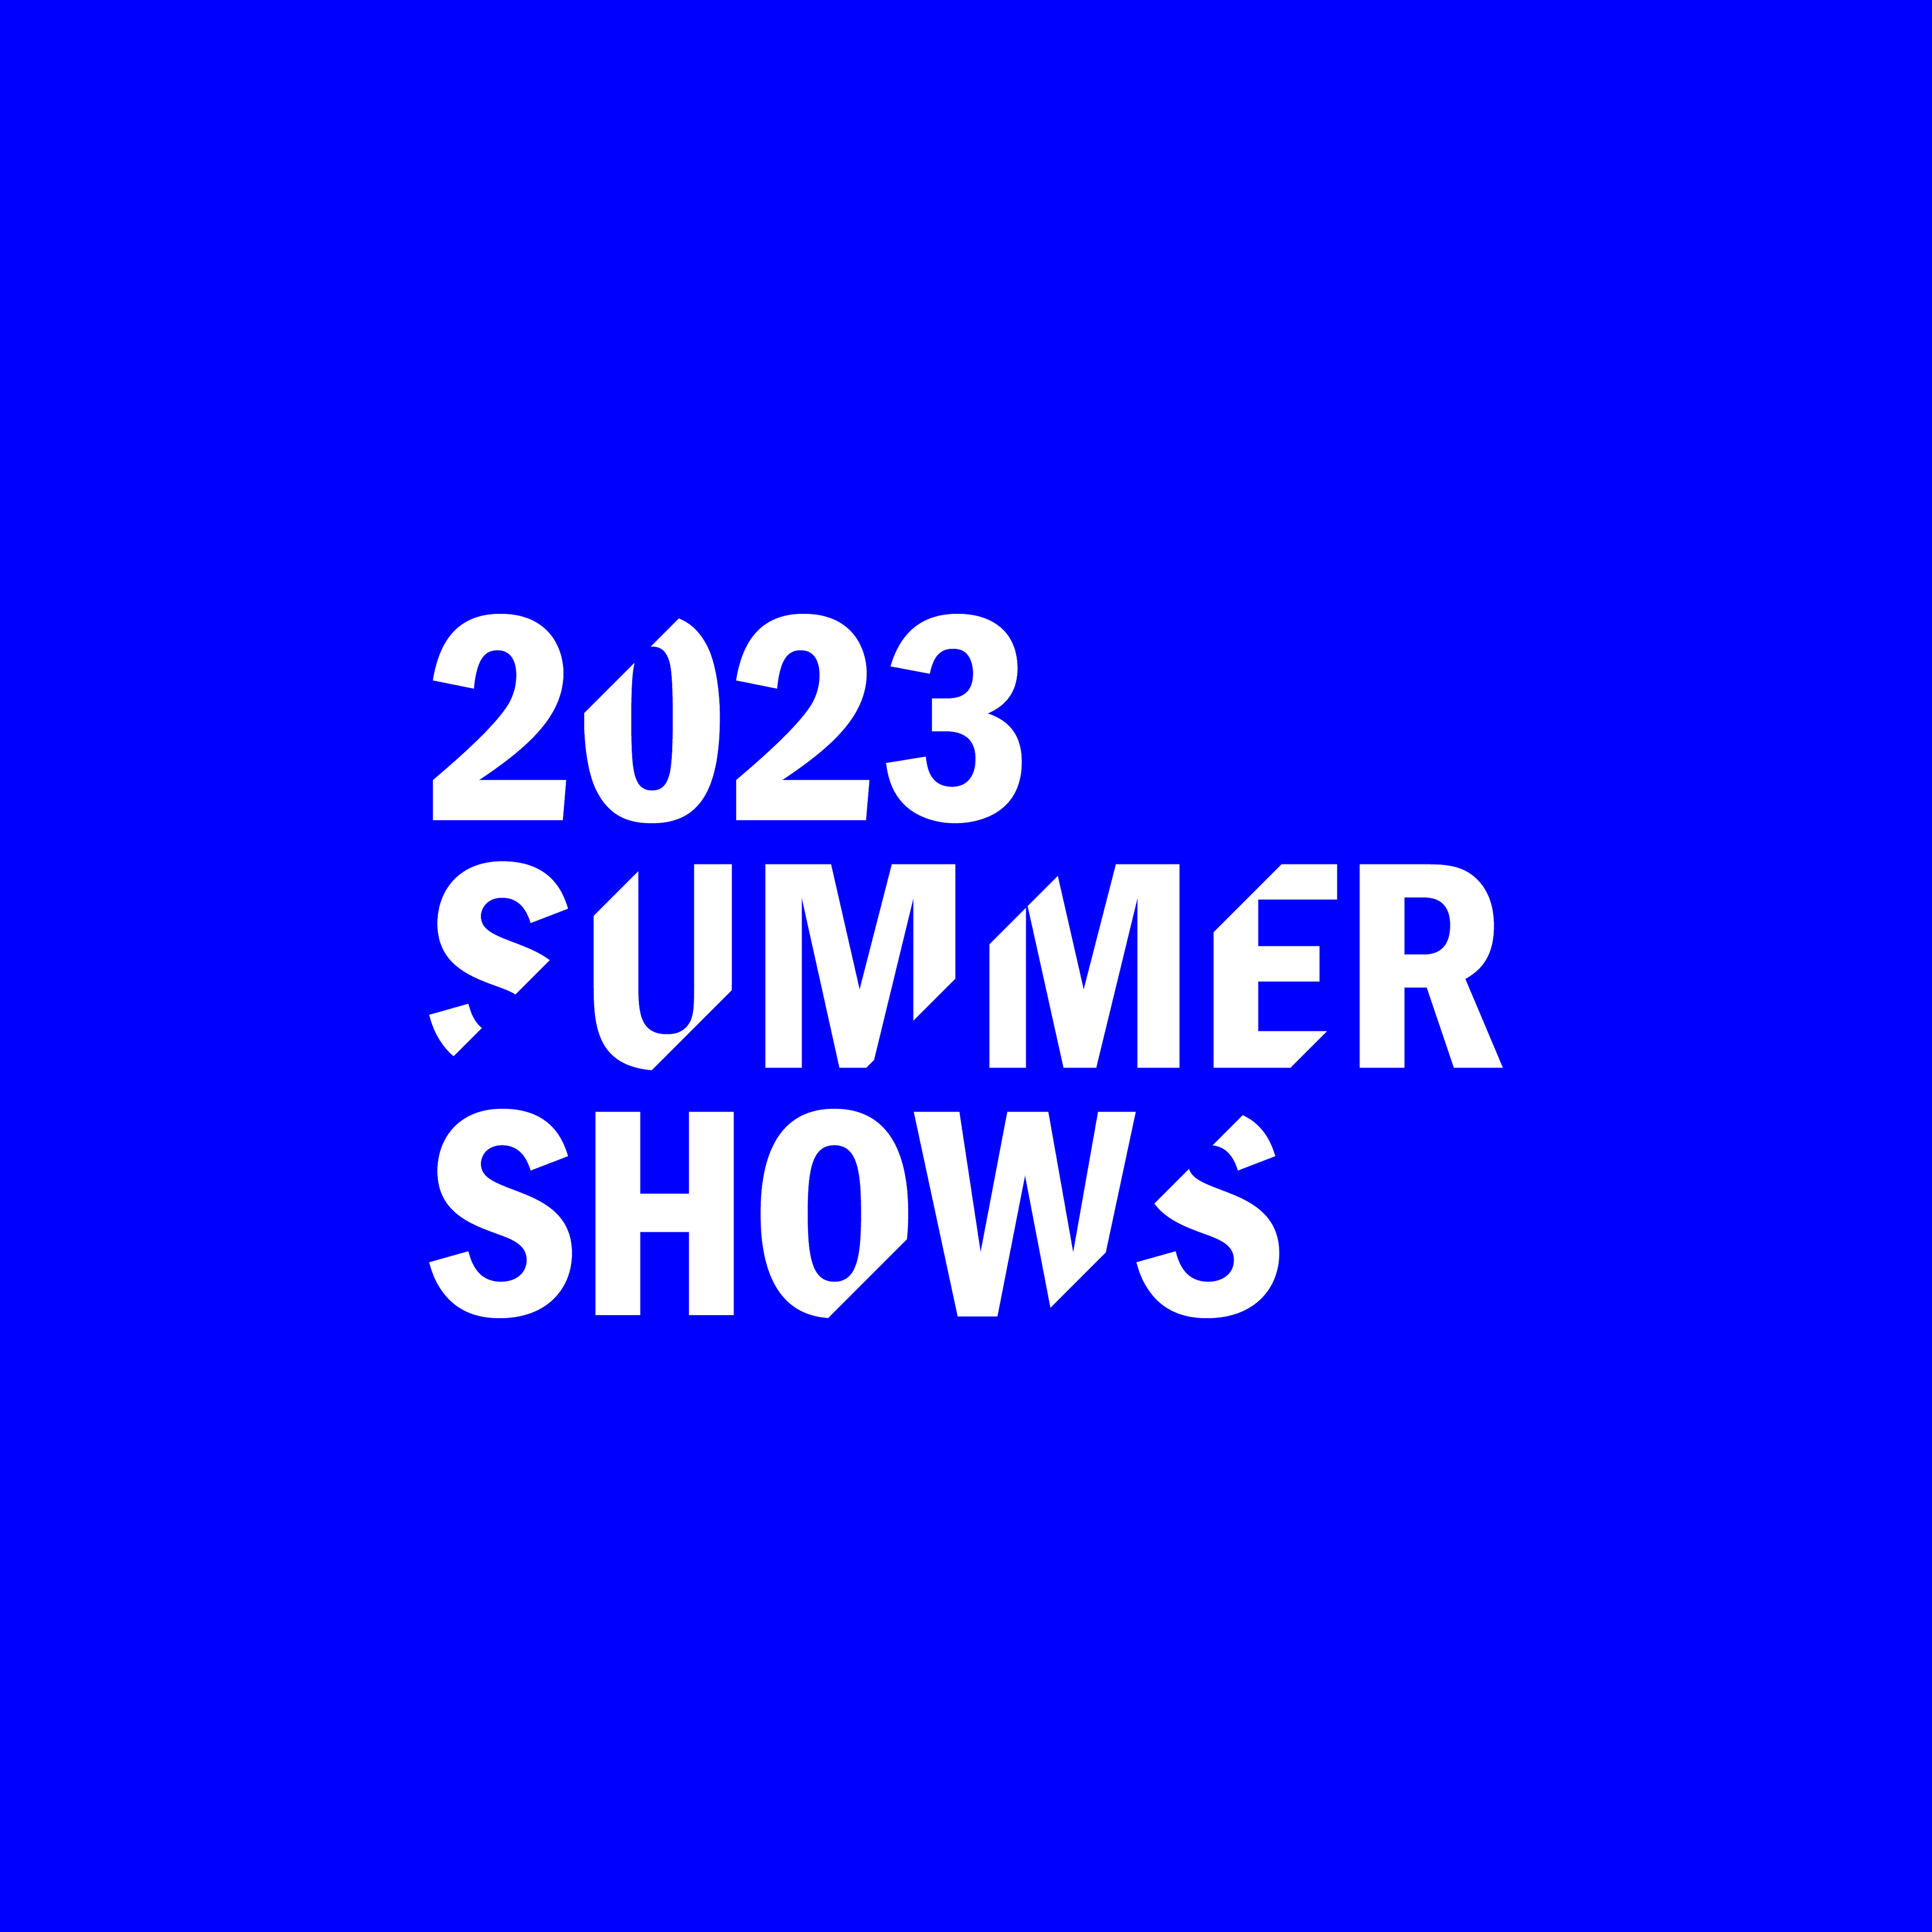 2023 Summer Shows website thumbnail 1080 x 1080px